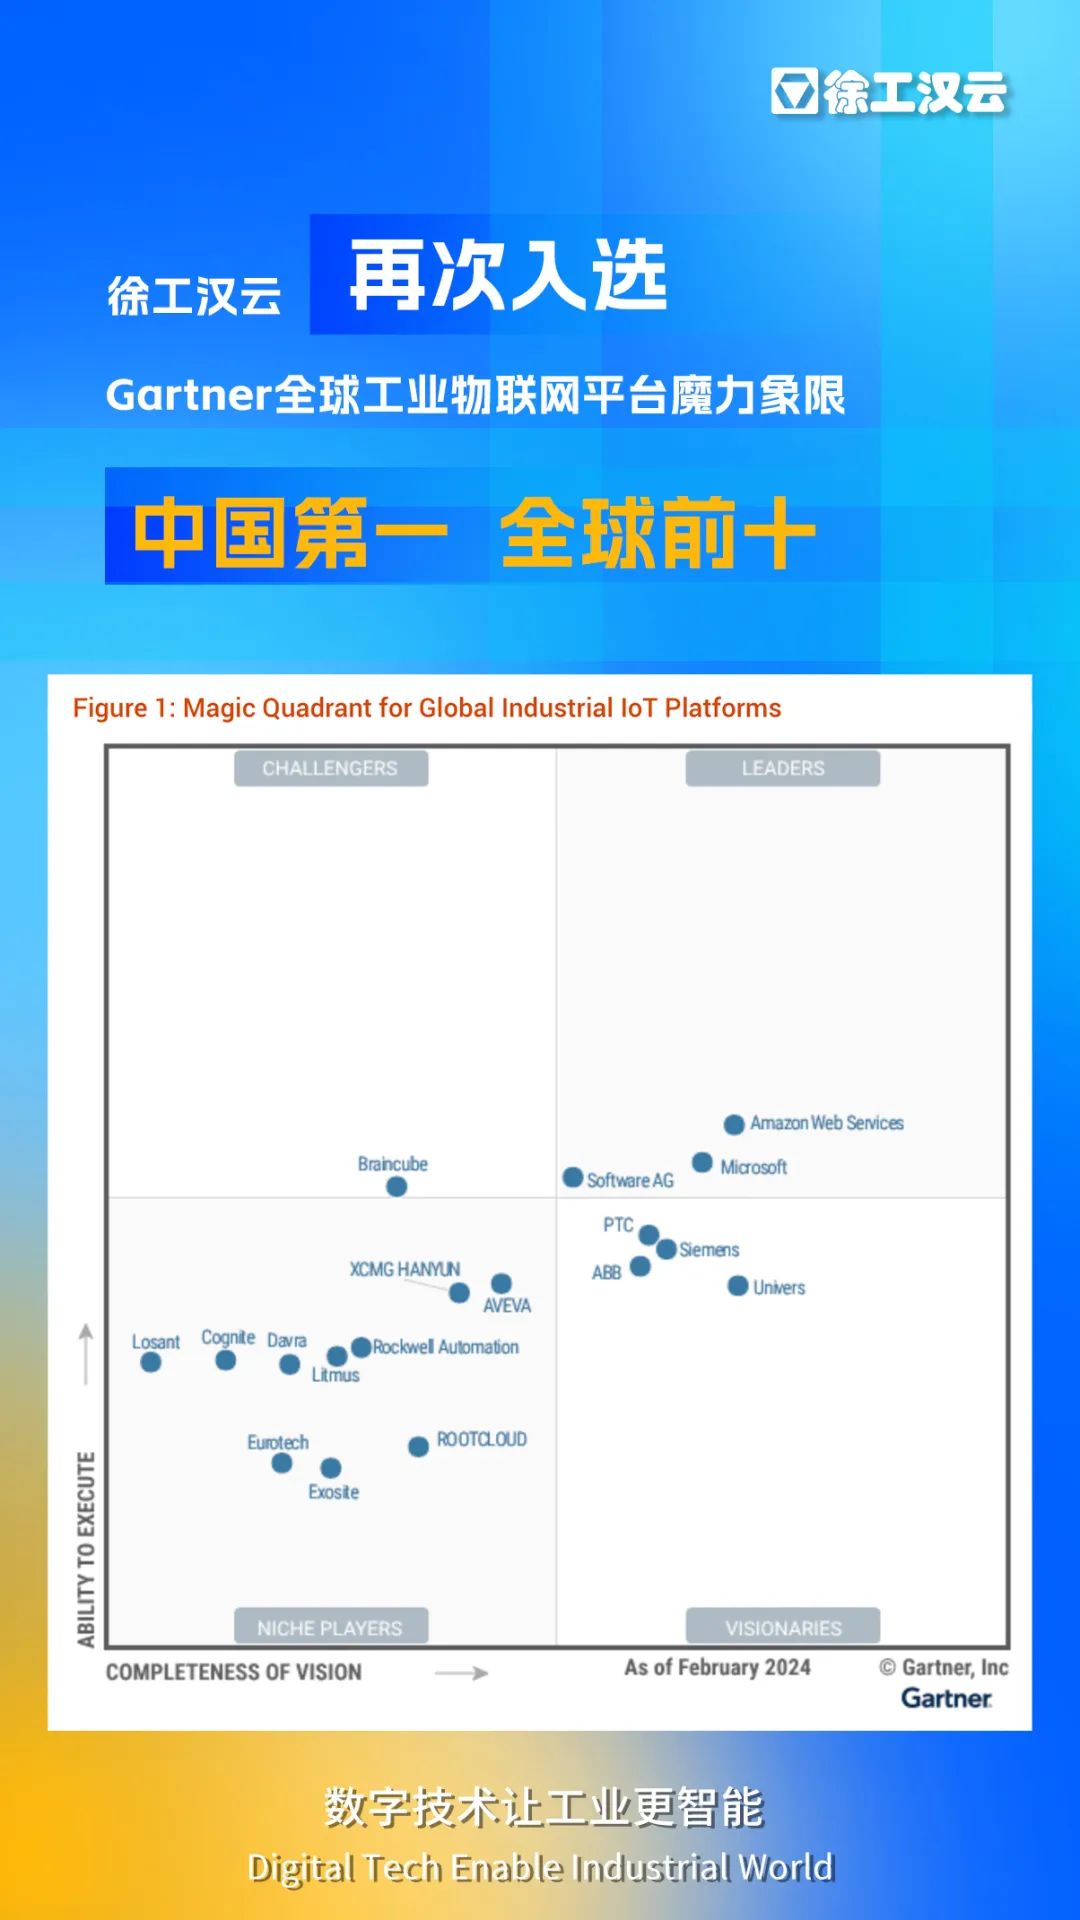 First in China, top ten in the world! XCMG Hanyun selected in Gartner Magic Quadrant again